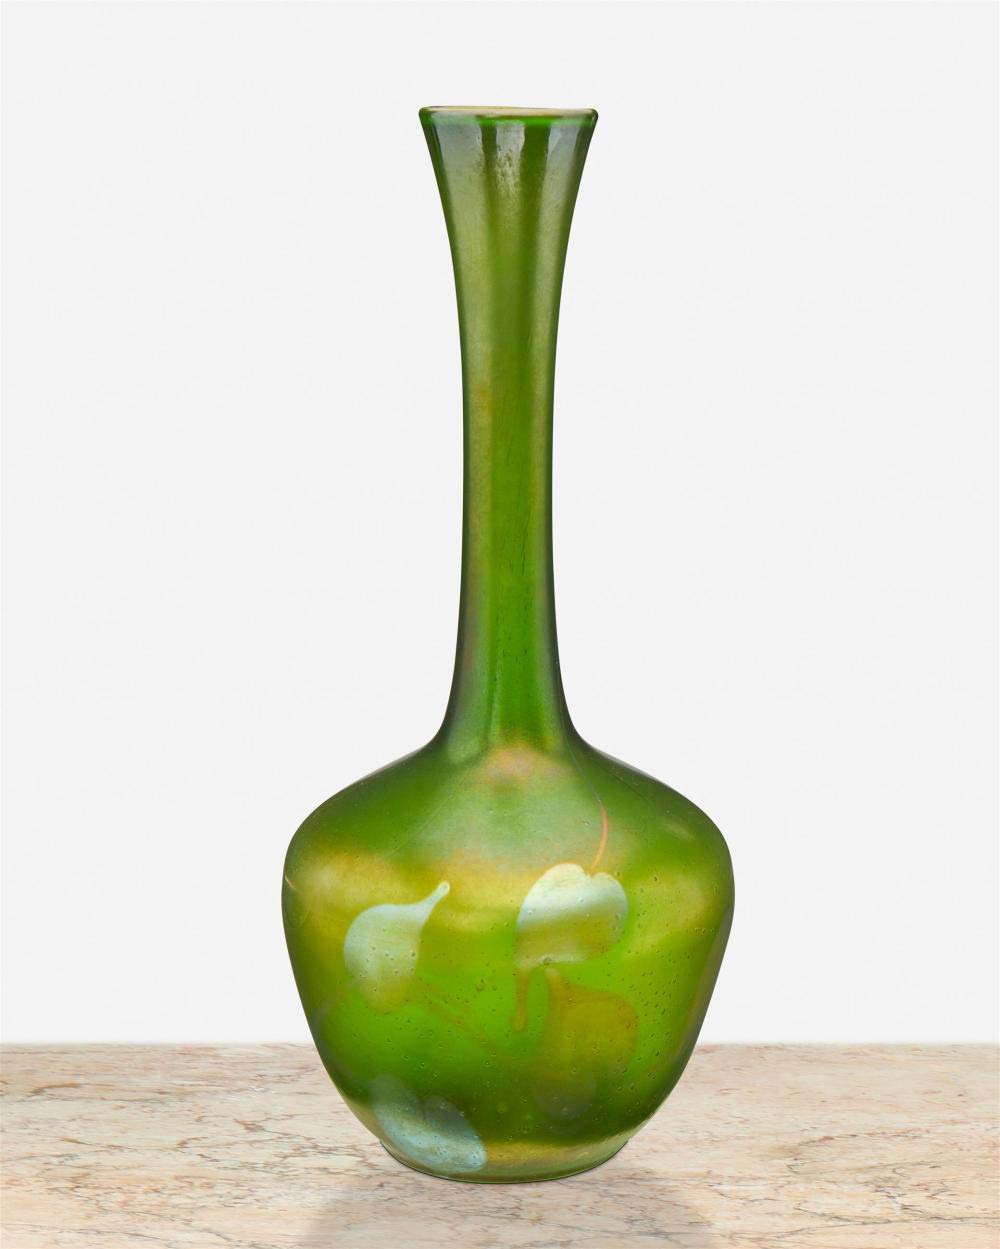 L.C. Tiffany Favrile glass leaf and vine vase, $2,813. Image courtesy John Moran Auctioneers